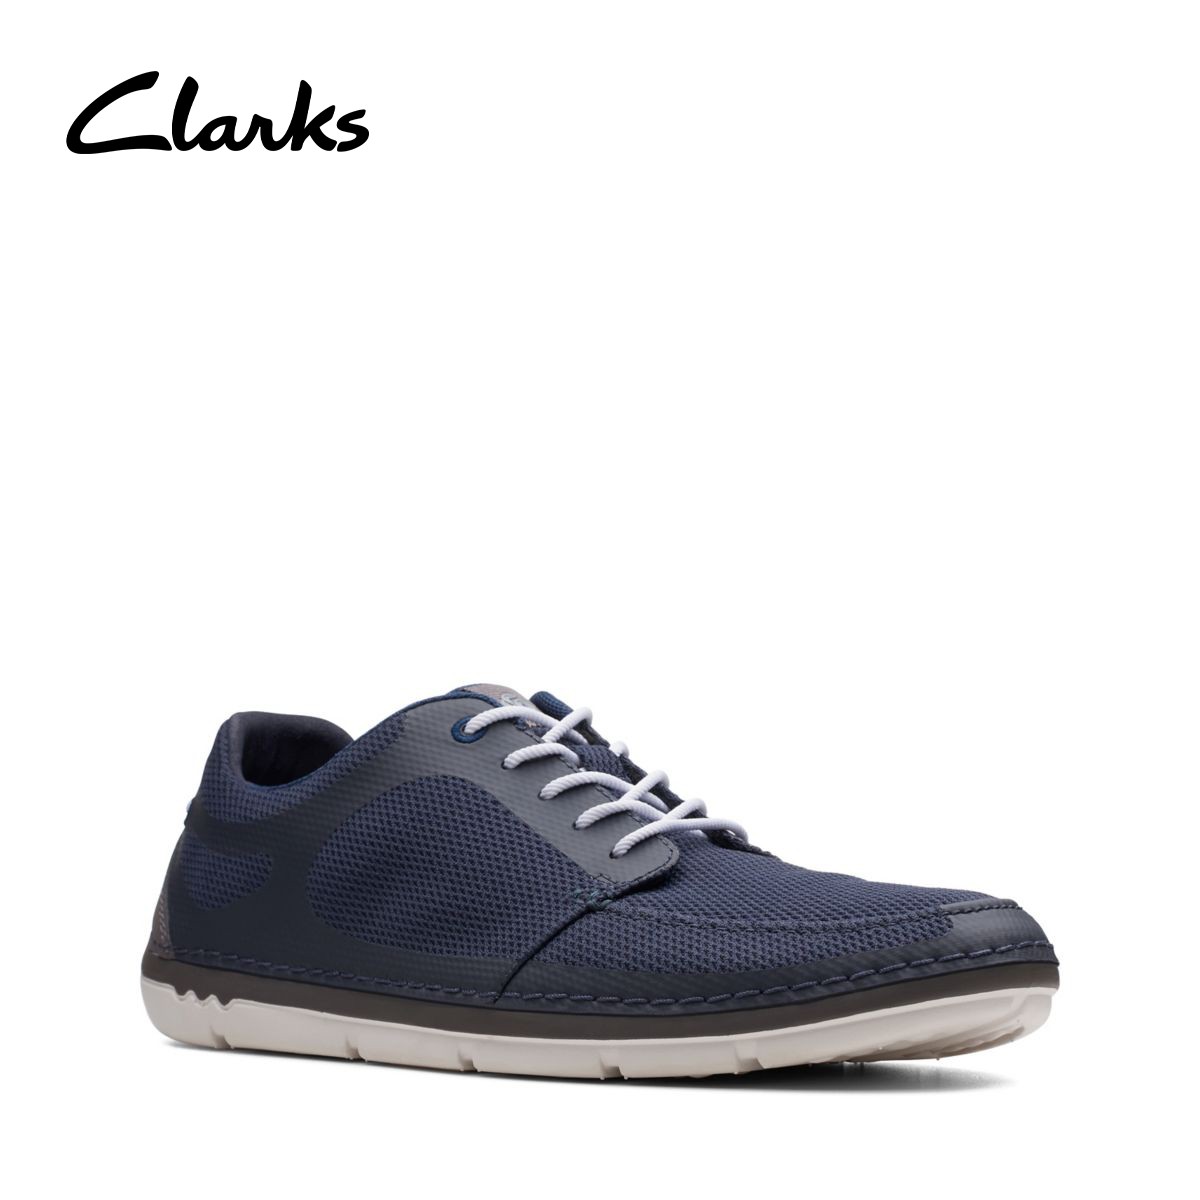 clarks mesh shoes